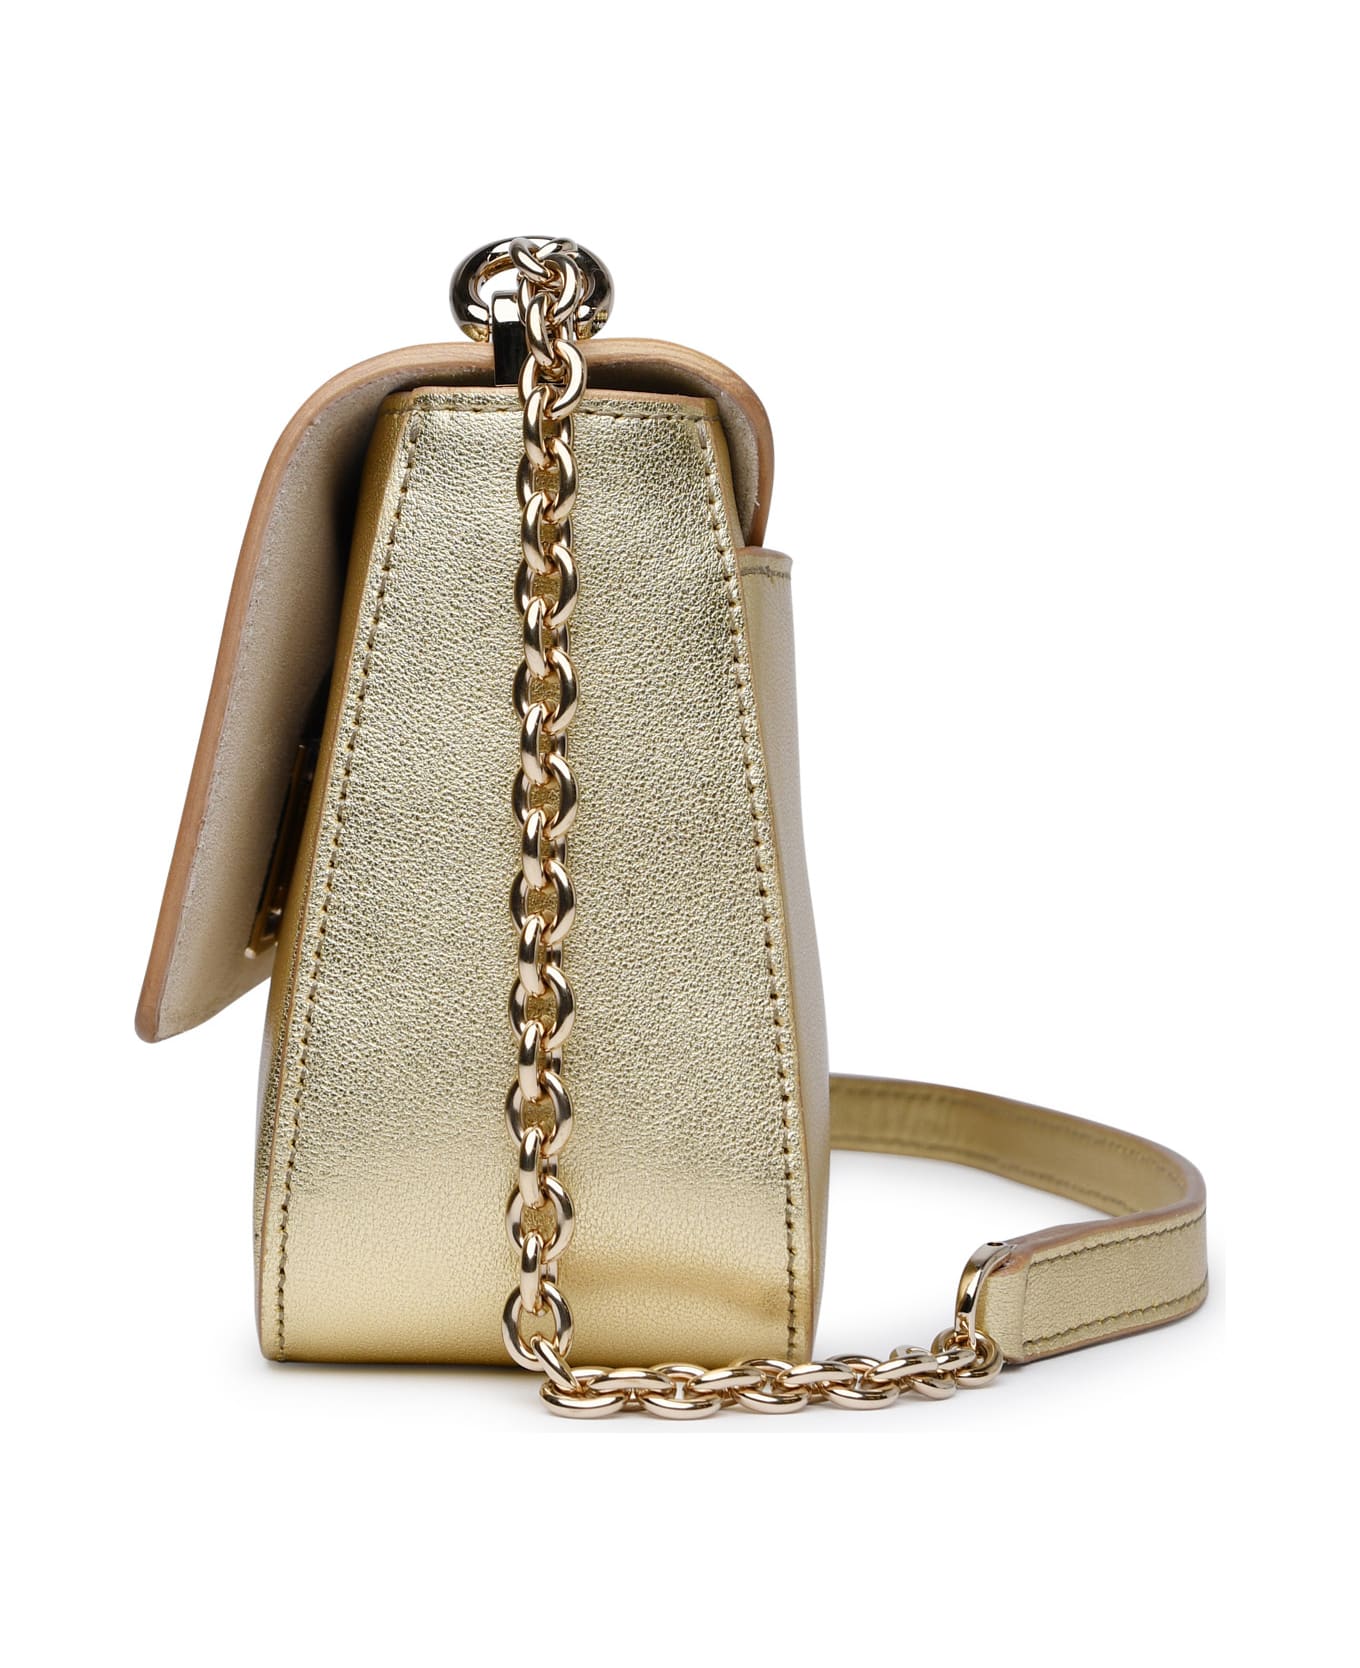 Furla 'furla 1927' Gold Calf Leather Bag - Color Gold